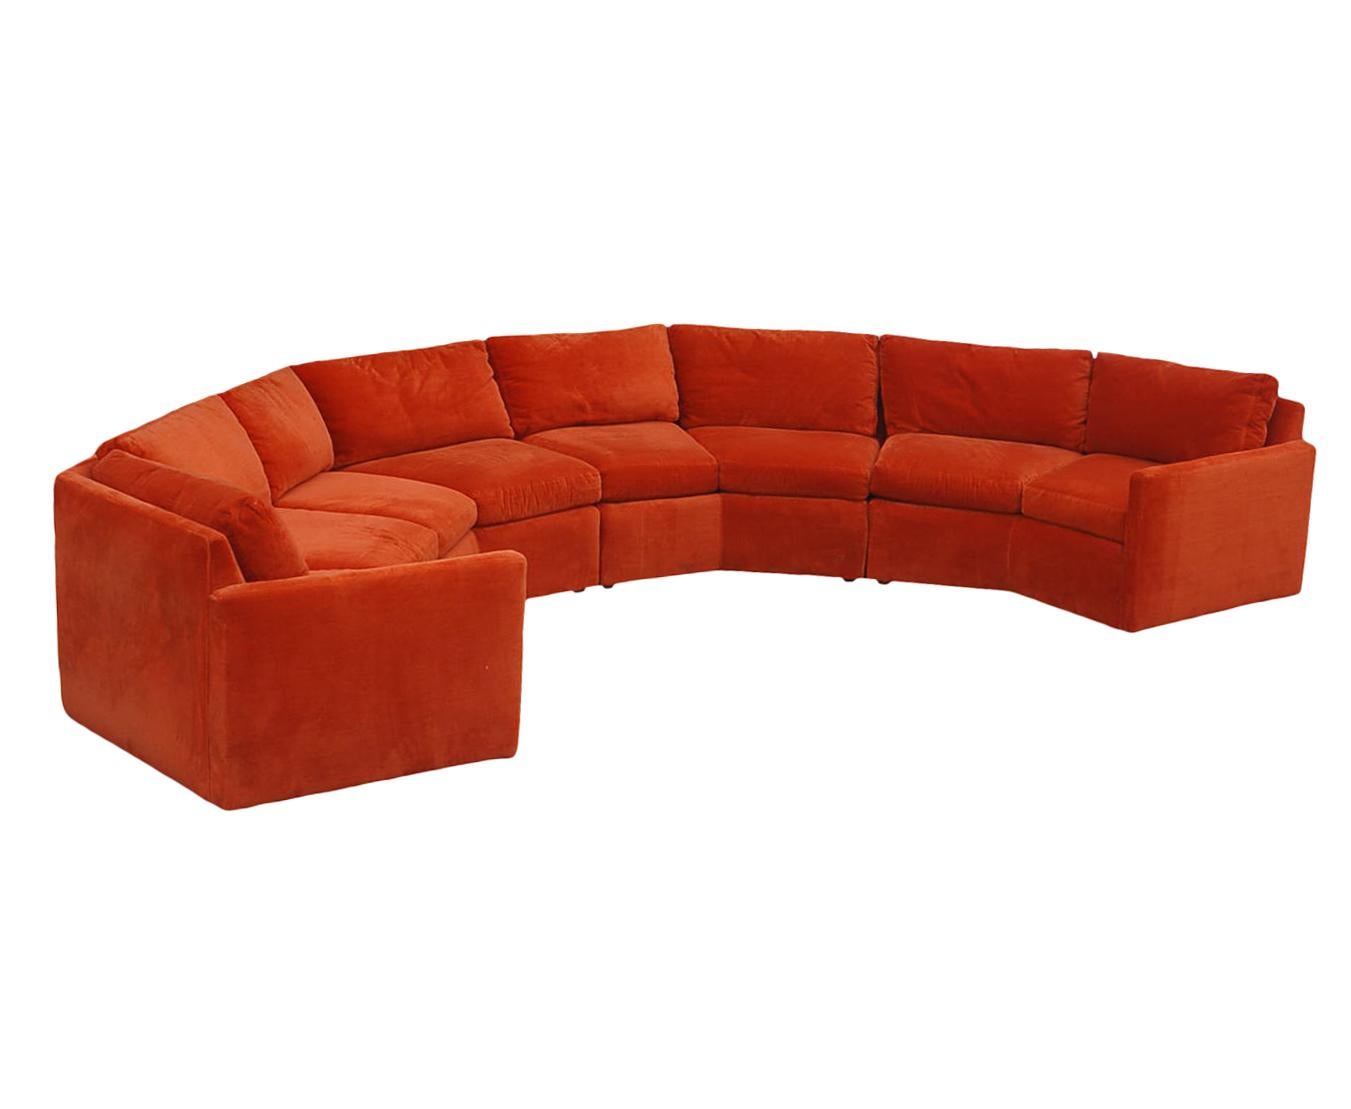 Late 20th Century Mid-Century Modern Circular Sectional Sofa by Milo Baughman for Bernhardt